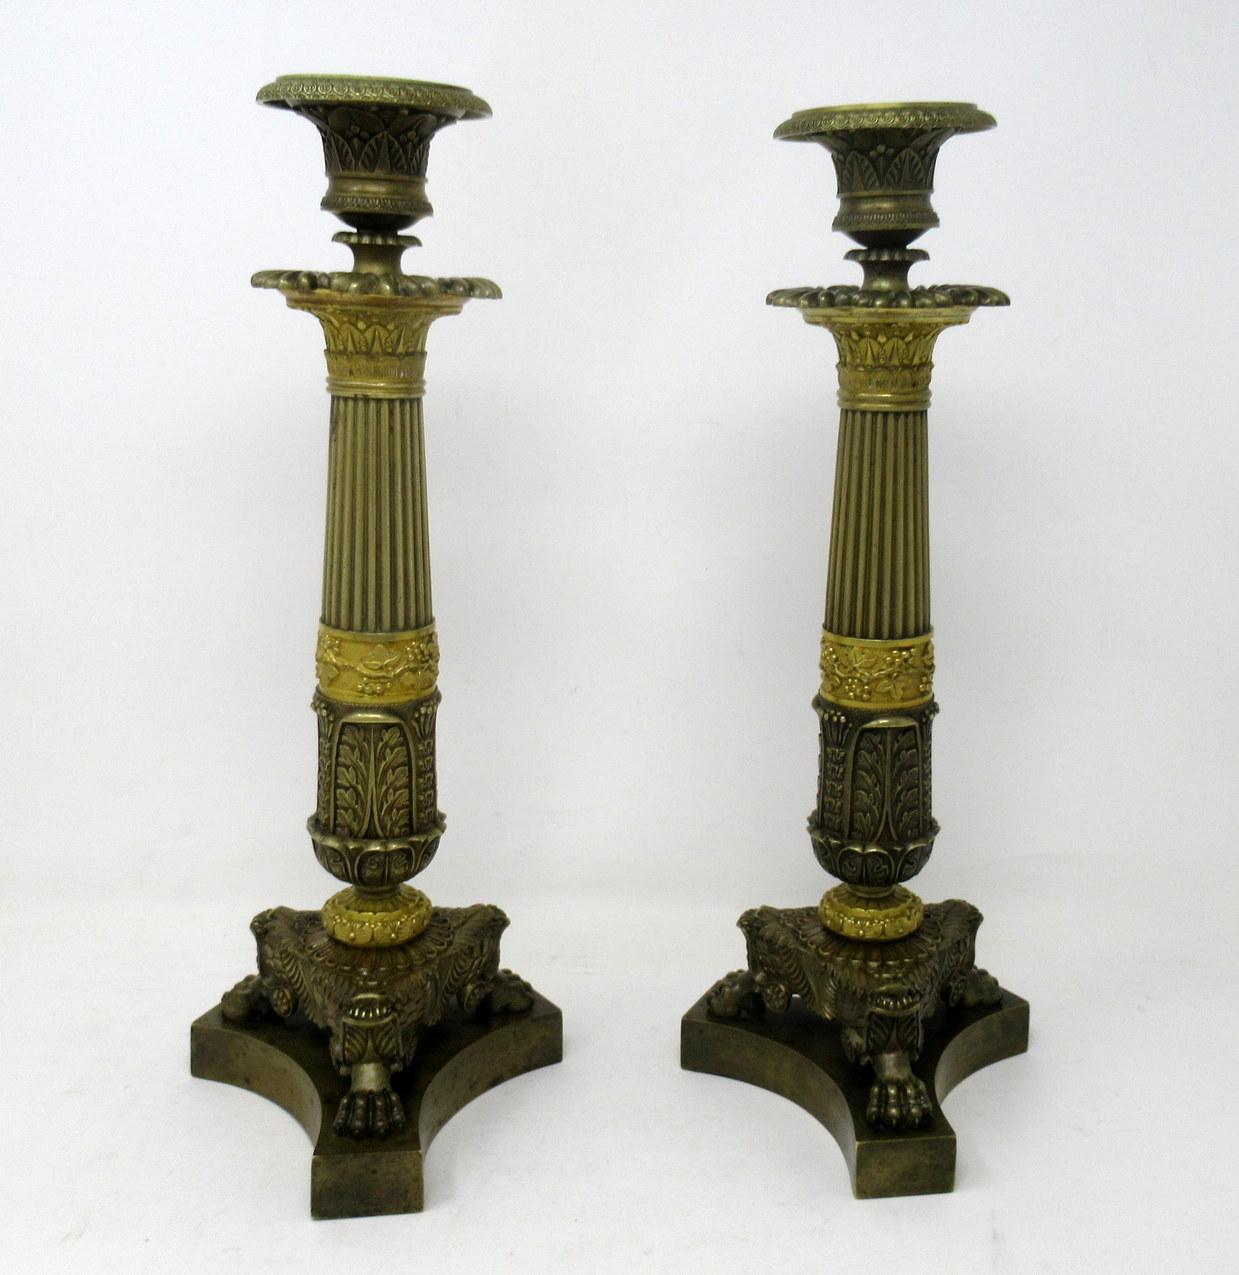 Regency Pair of Ormolu Patinated Bronze Acanthus Empire-Style Candlesticks, 19th Century